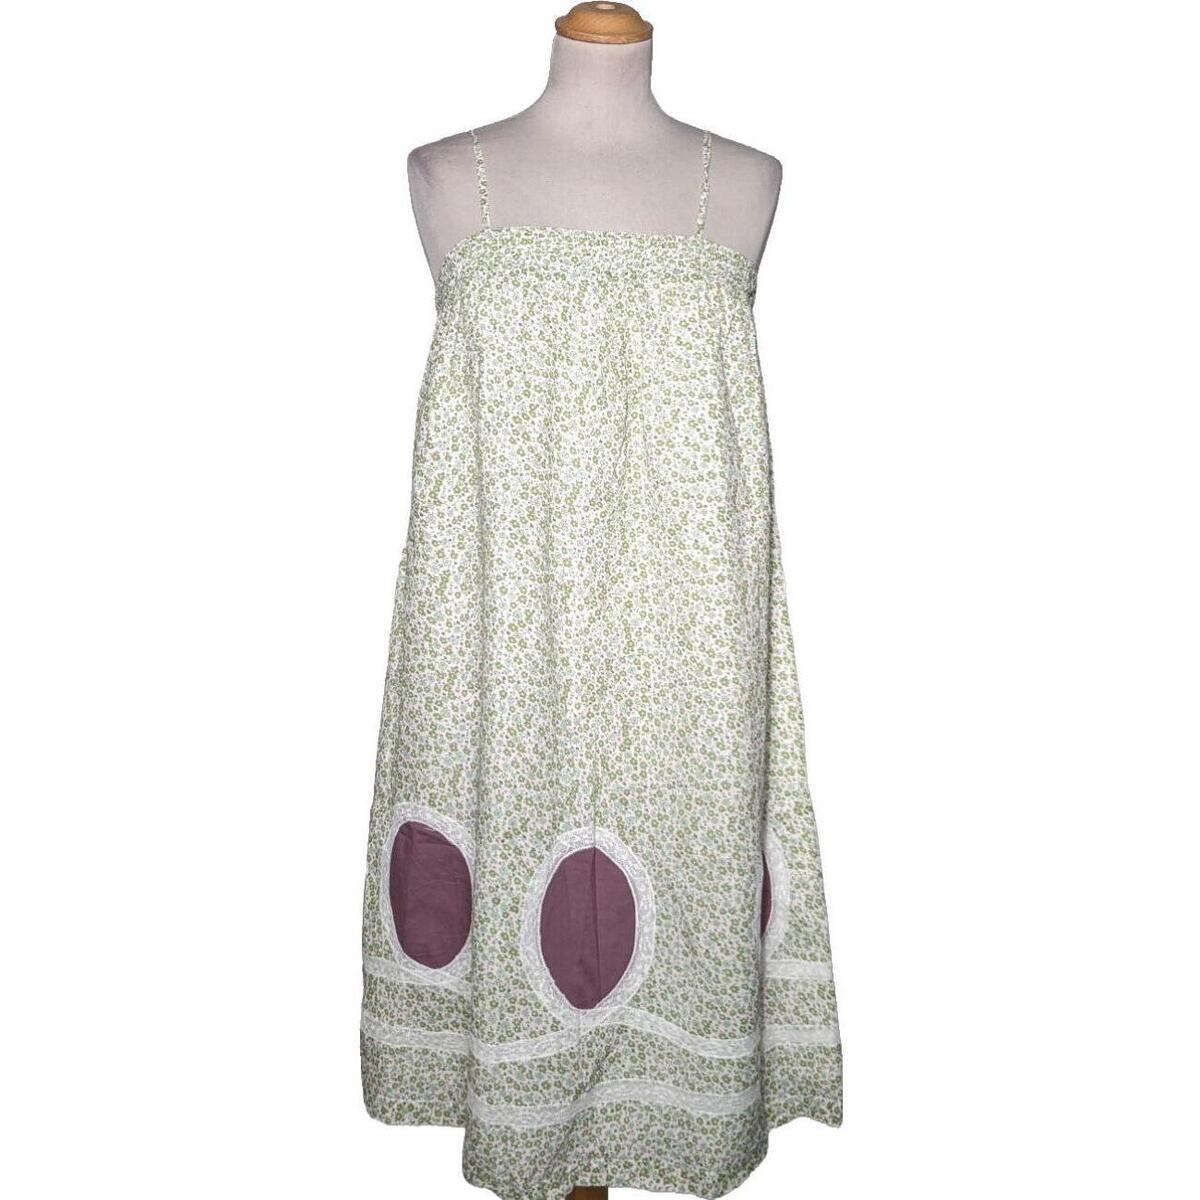 Vêtements Femme Loints Of Holla robe courte  36 - T1 - S Vert Vert